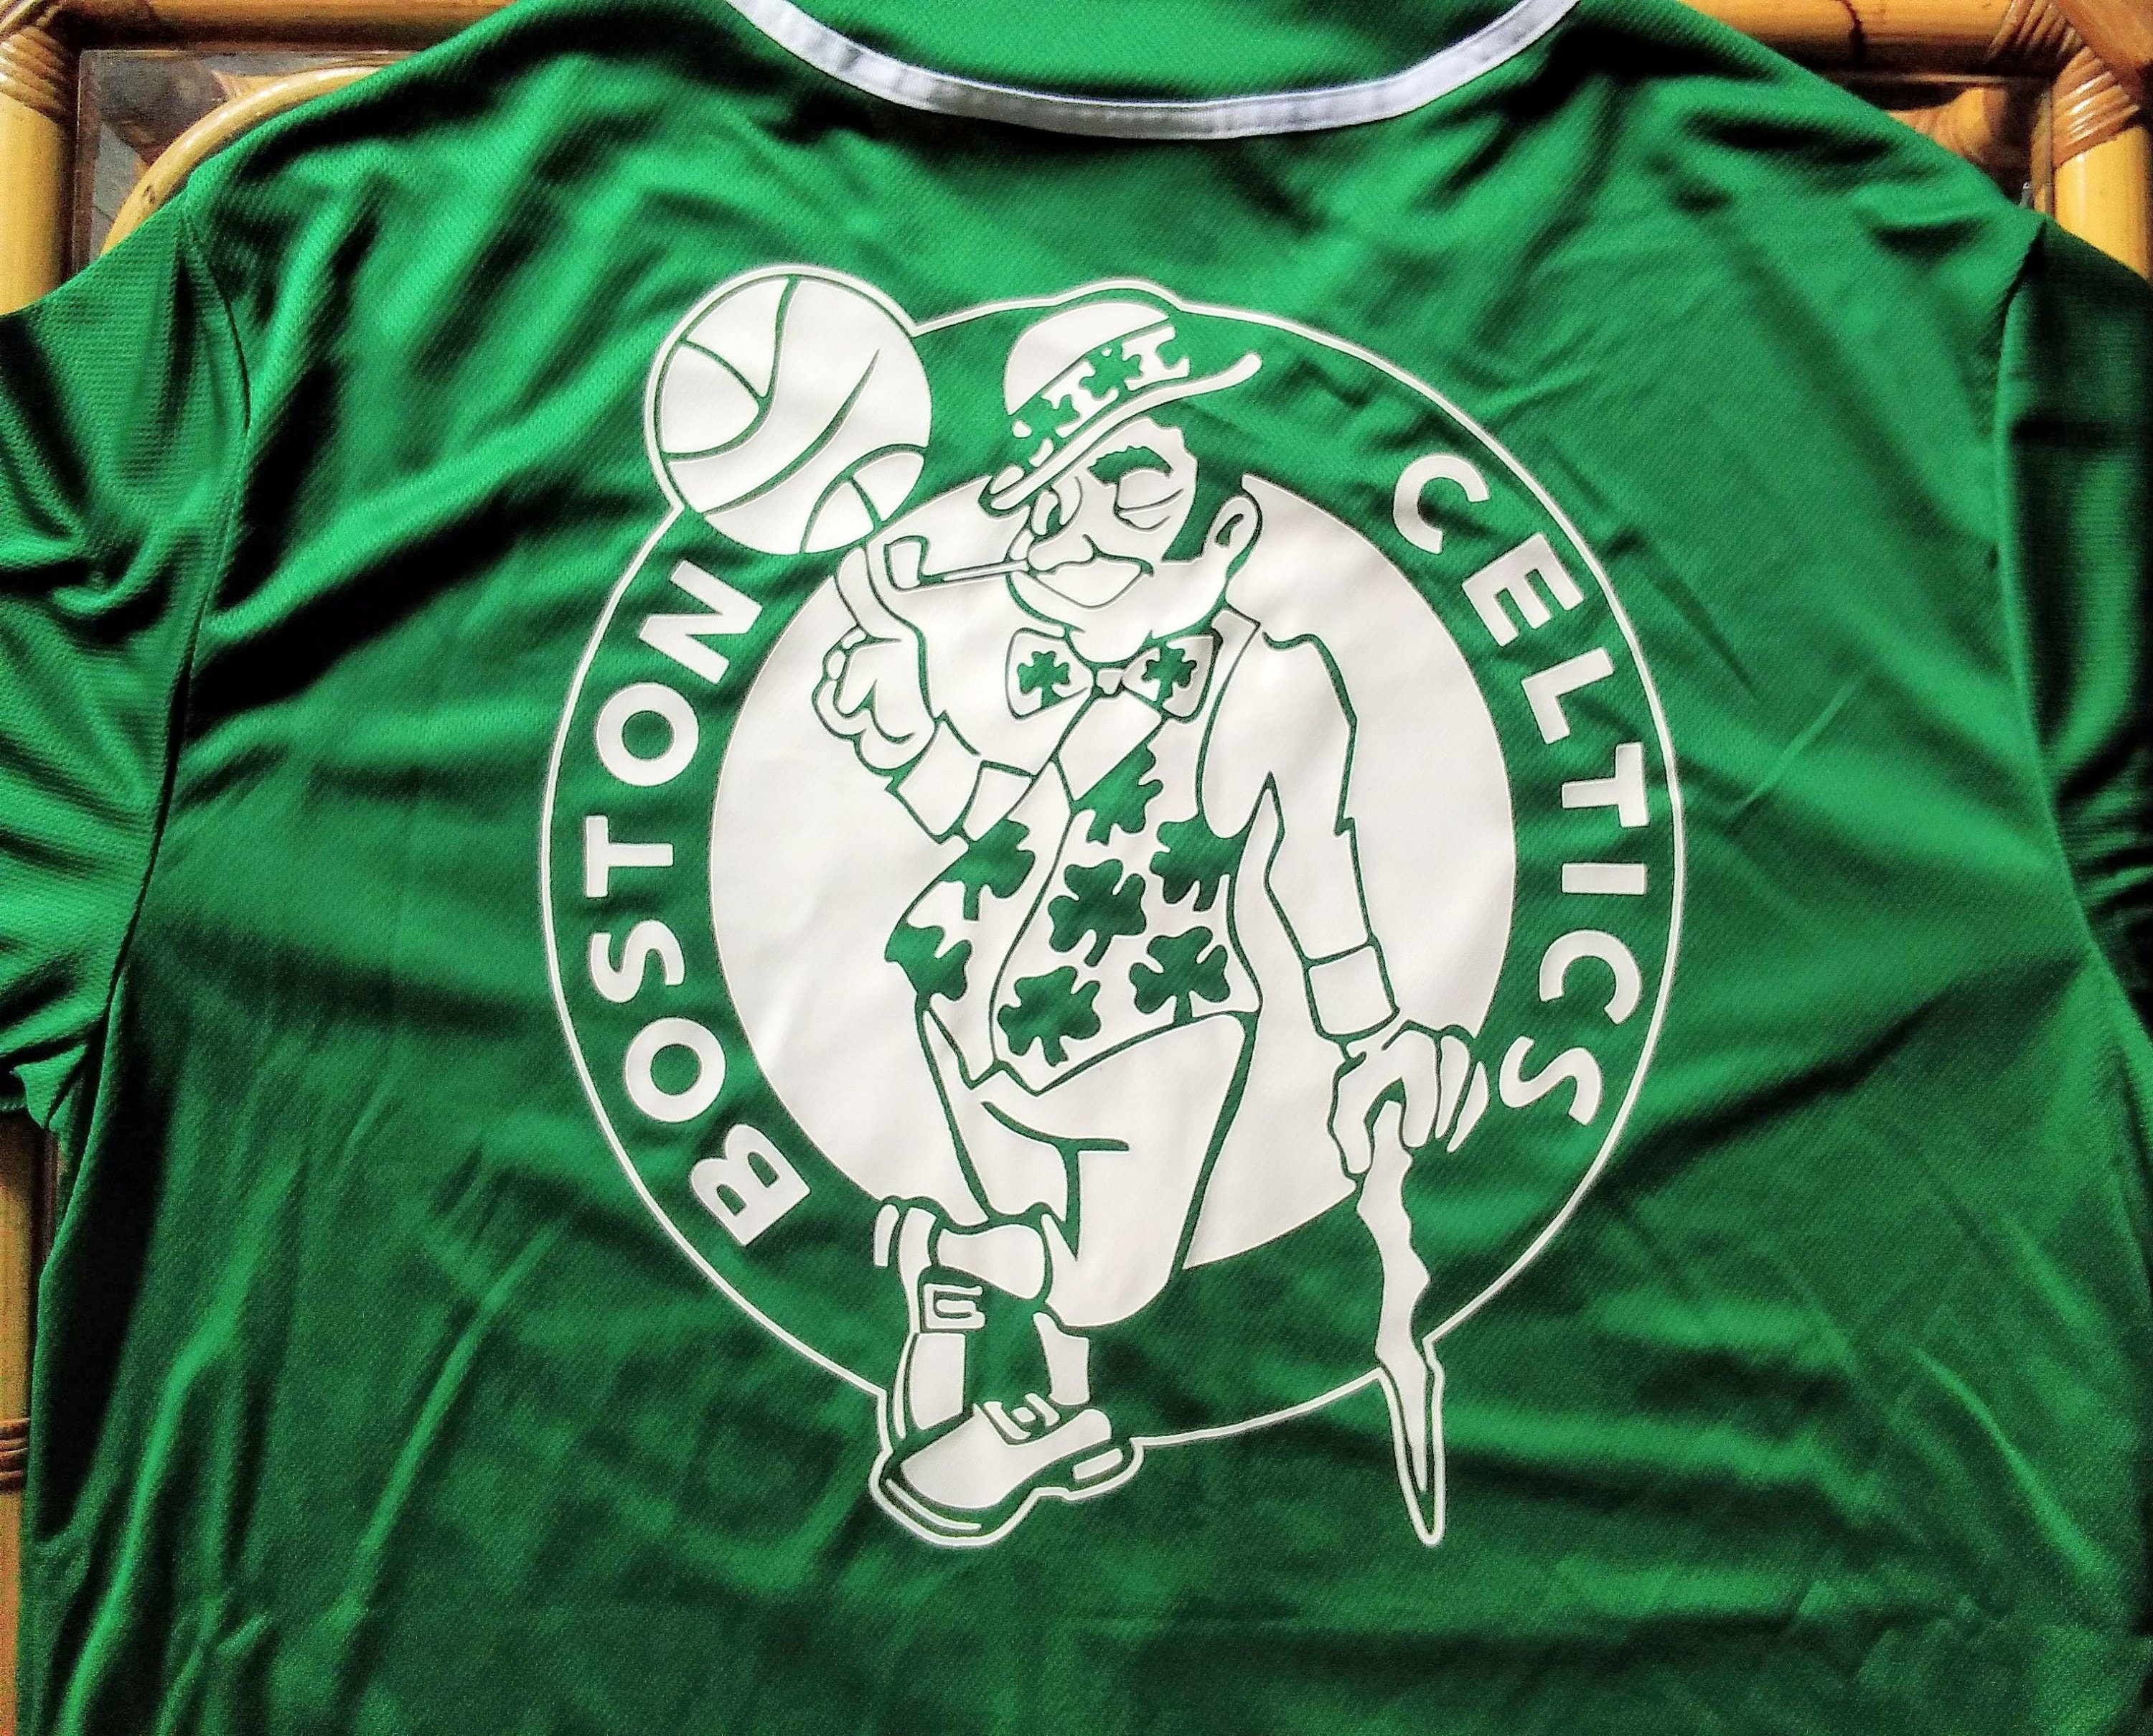 Warren Lotas Paul Pierce Boston Celtics Shirt - High-Quality